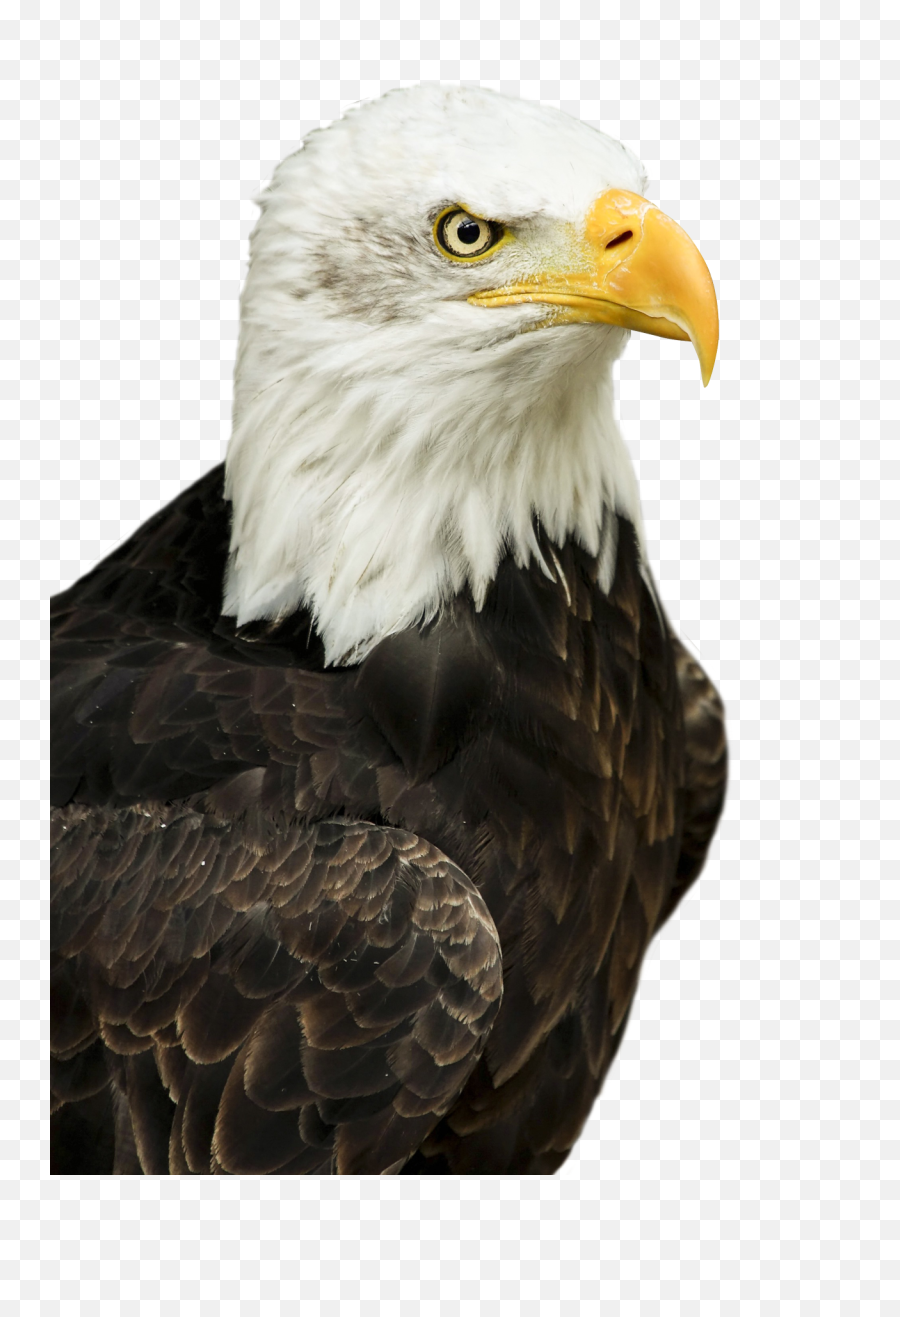 Eagle Png Image - Purepng Free Transparent Cc0 Png Image Bald Eagle,Bald Eagle Png